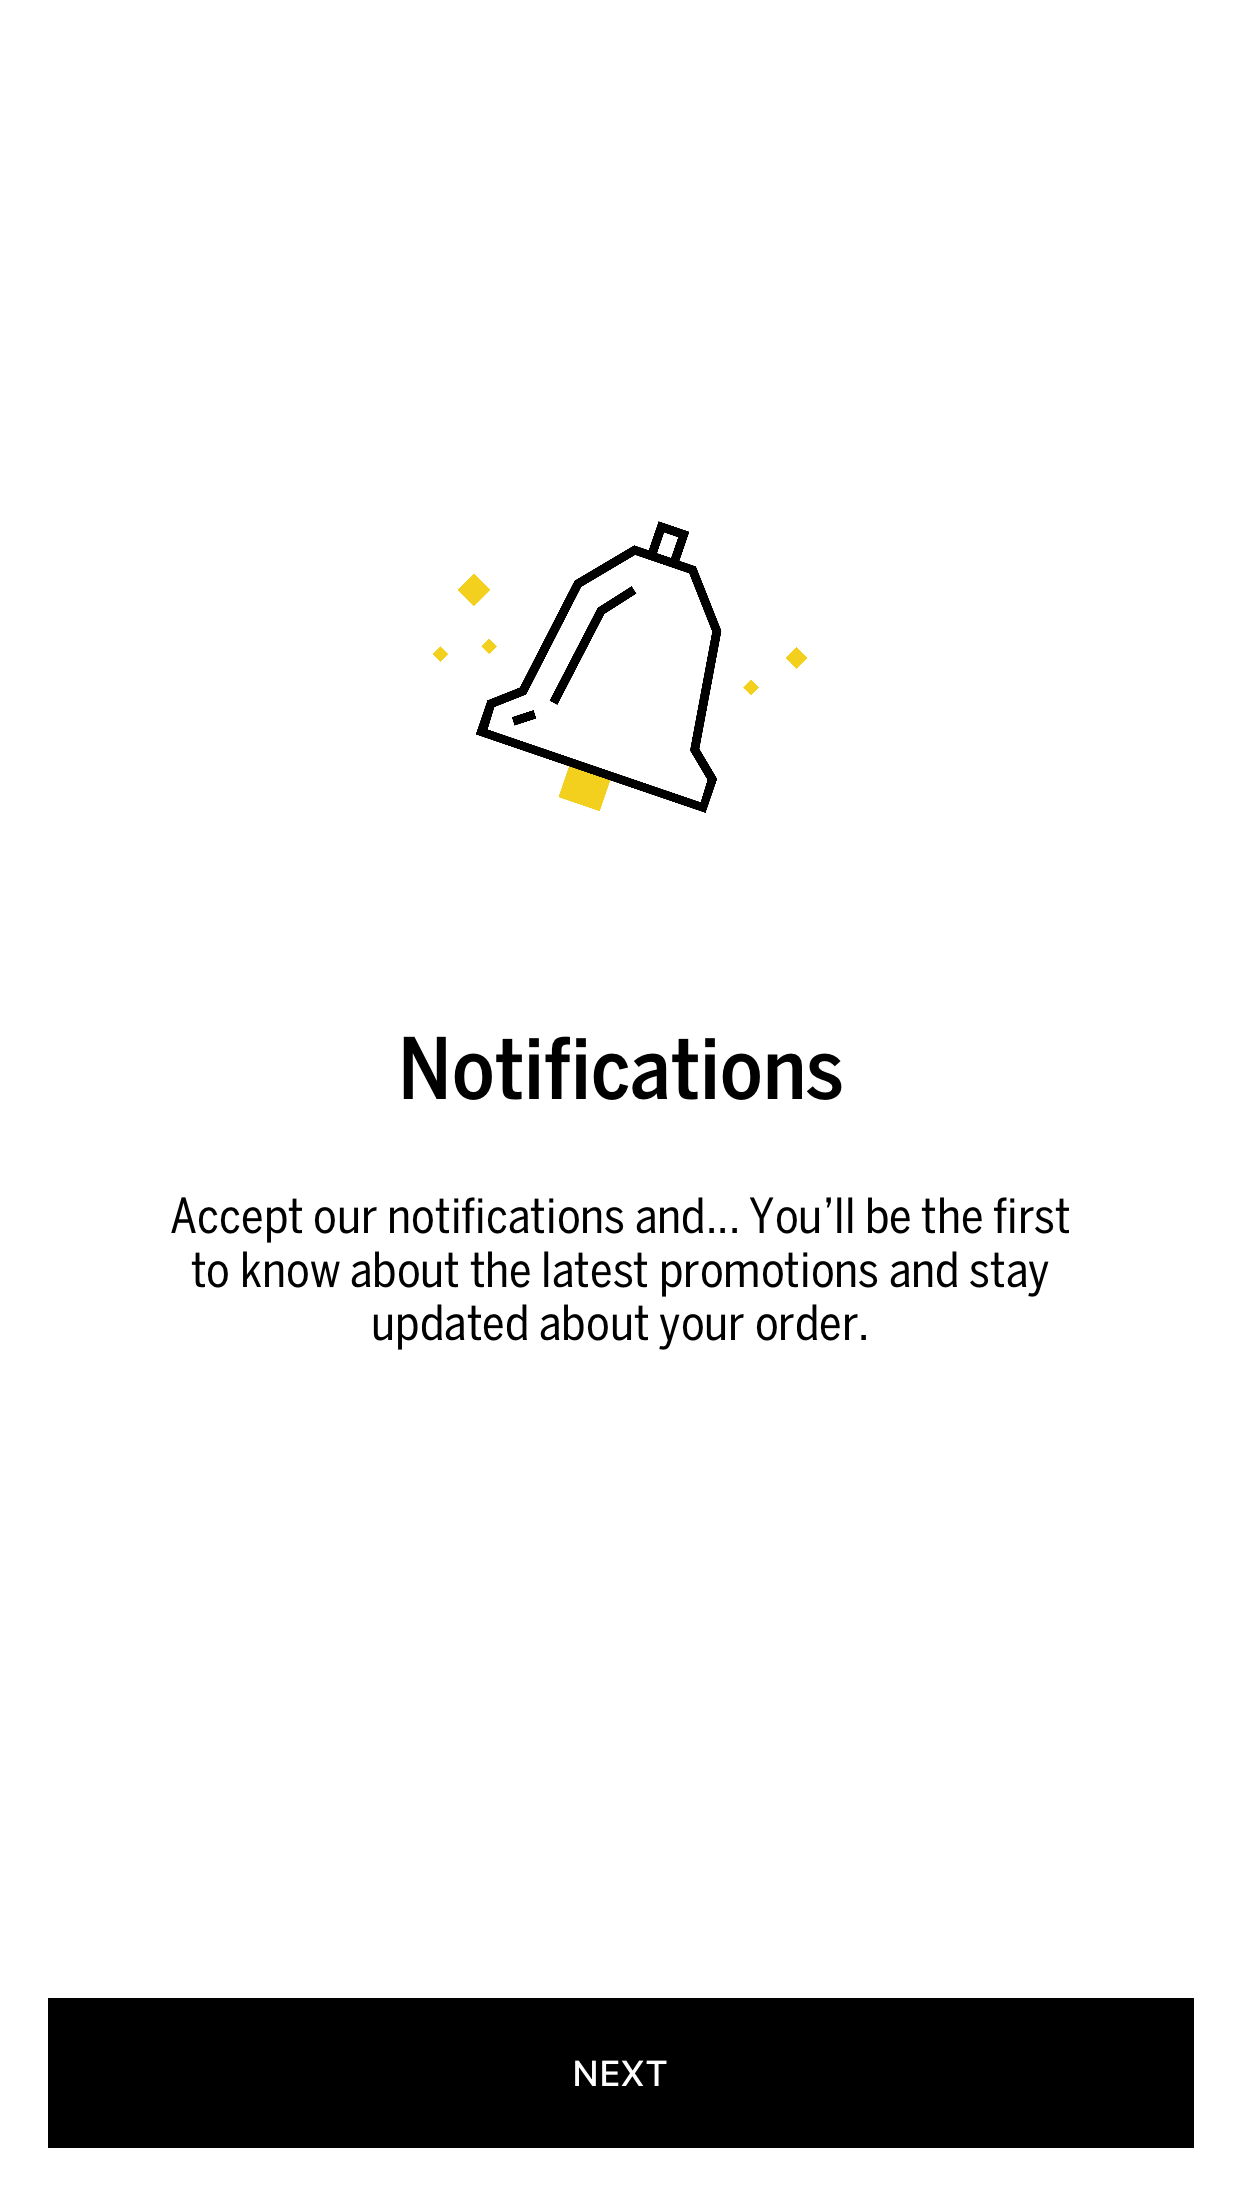 Bershka Mobile App Notification Permission